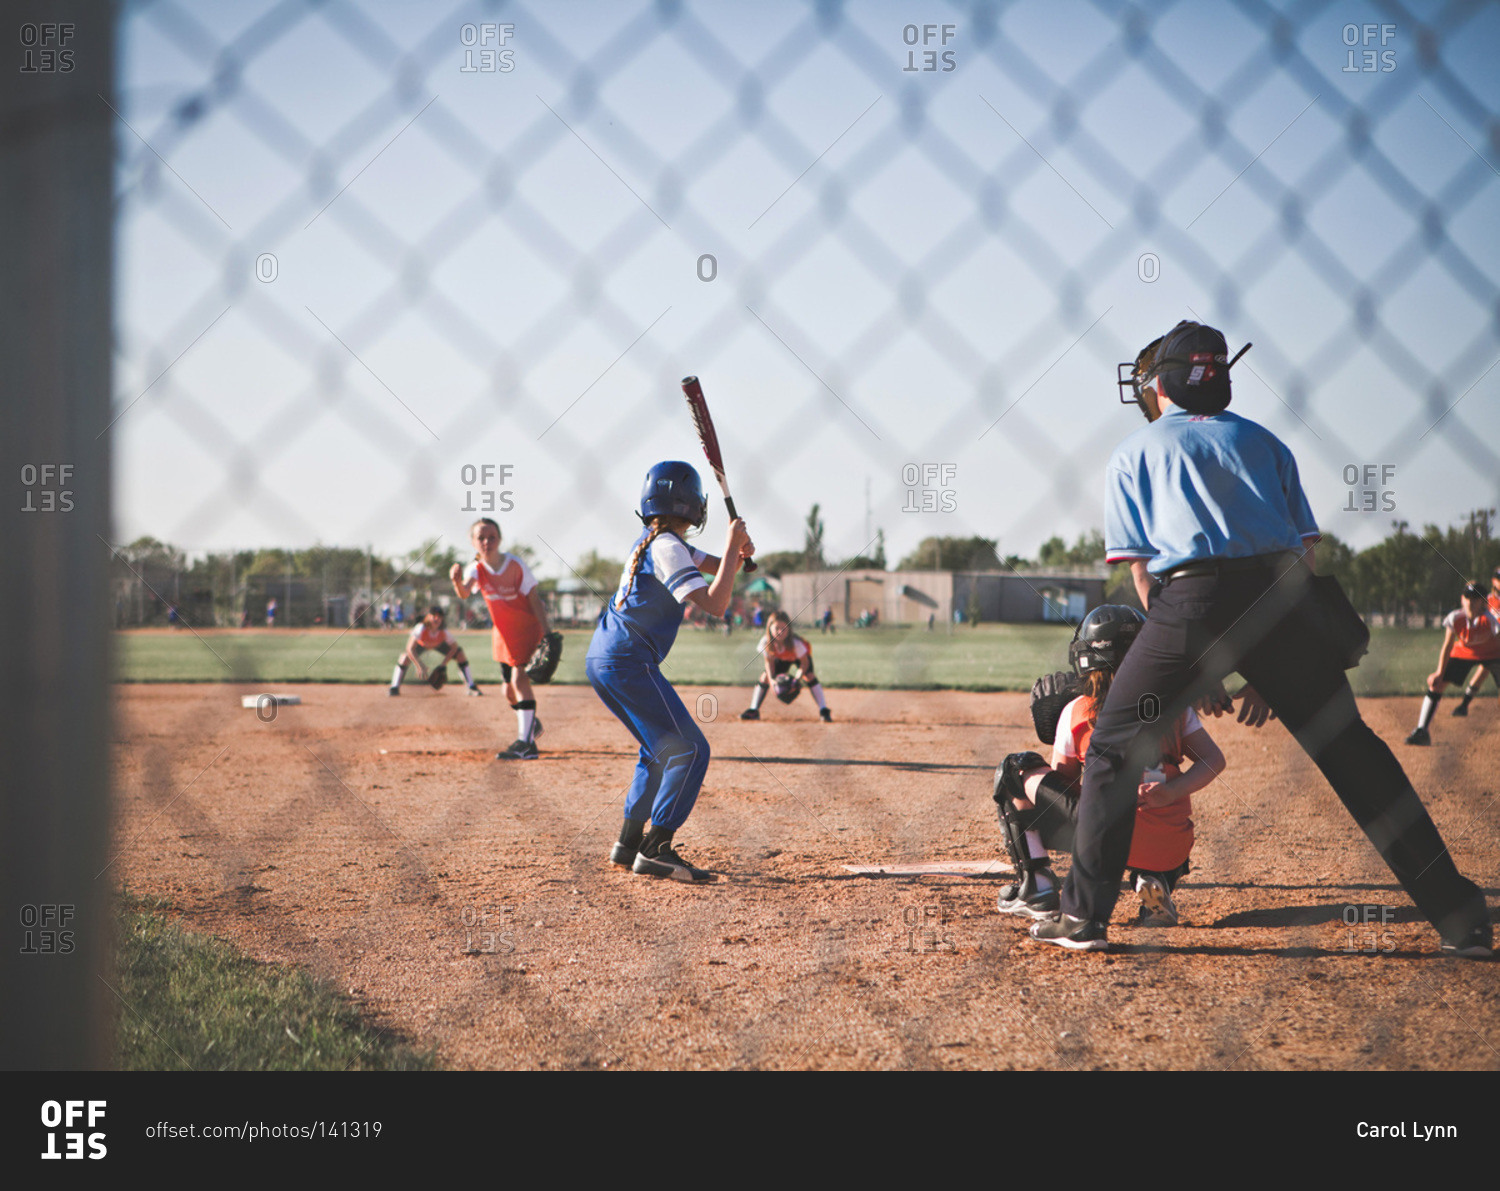 Girls playing baseball in a field